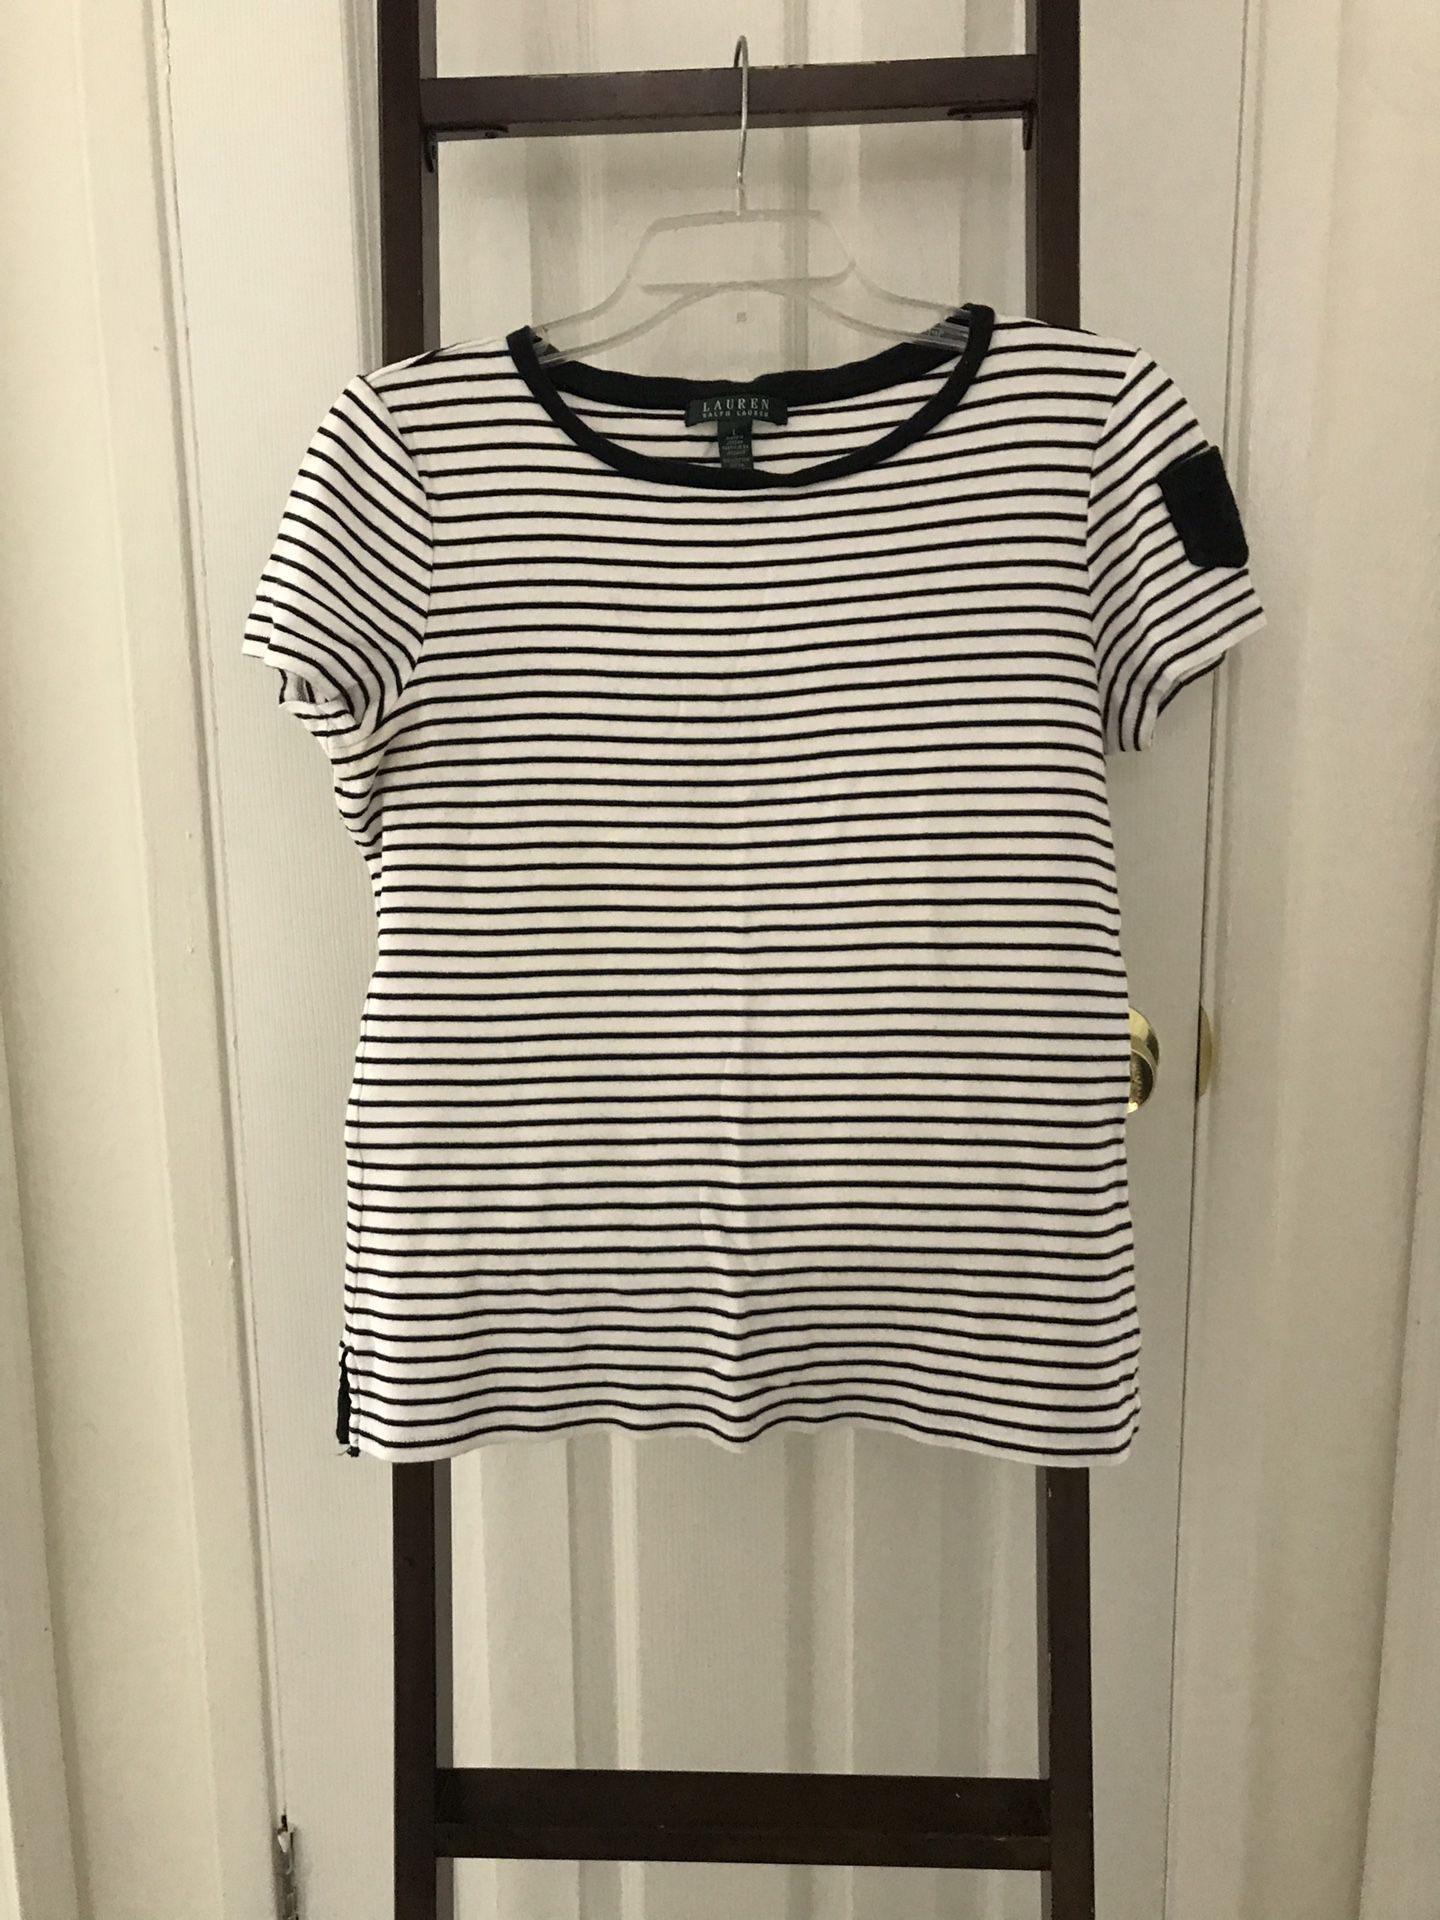 Ralph Lauren women’s shirt black and white striped size lrg large